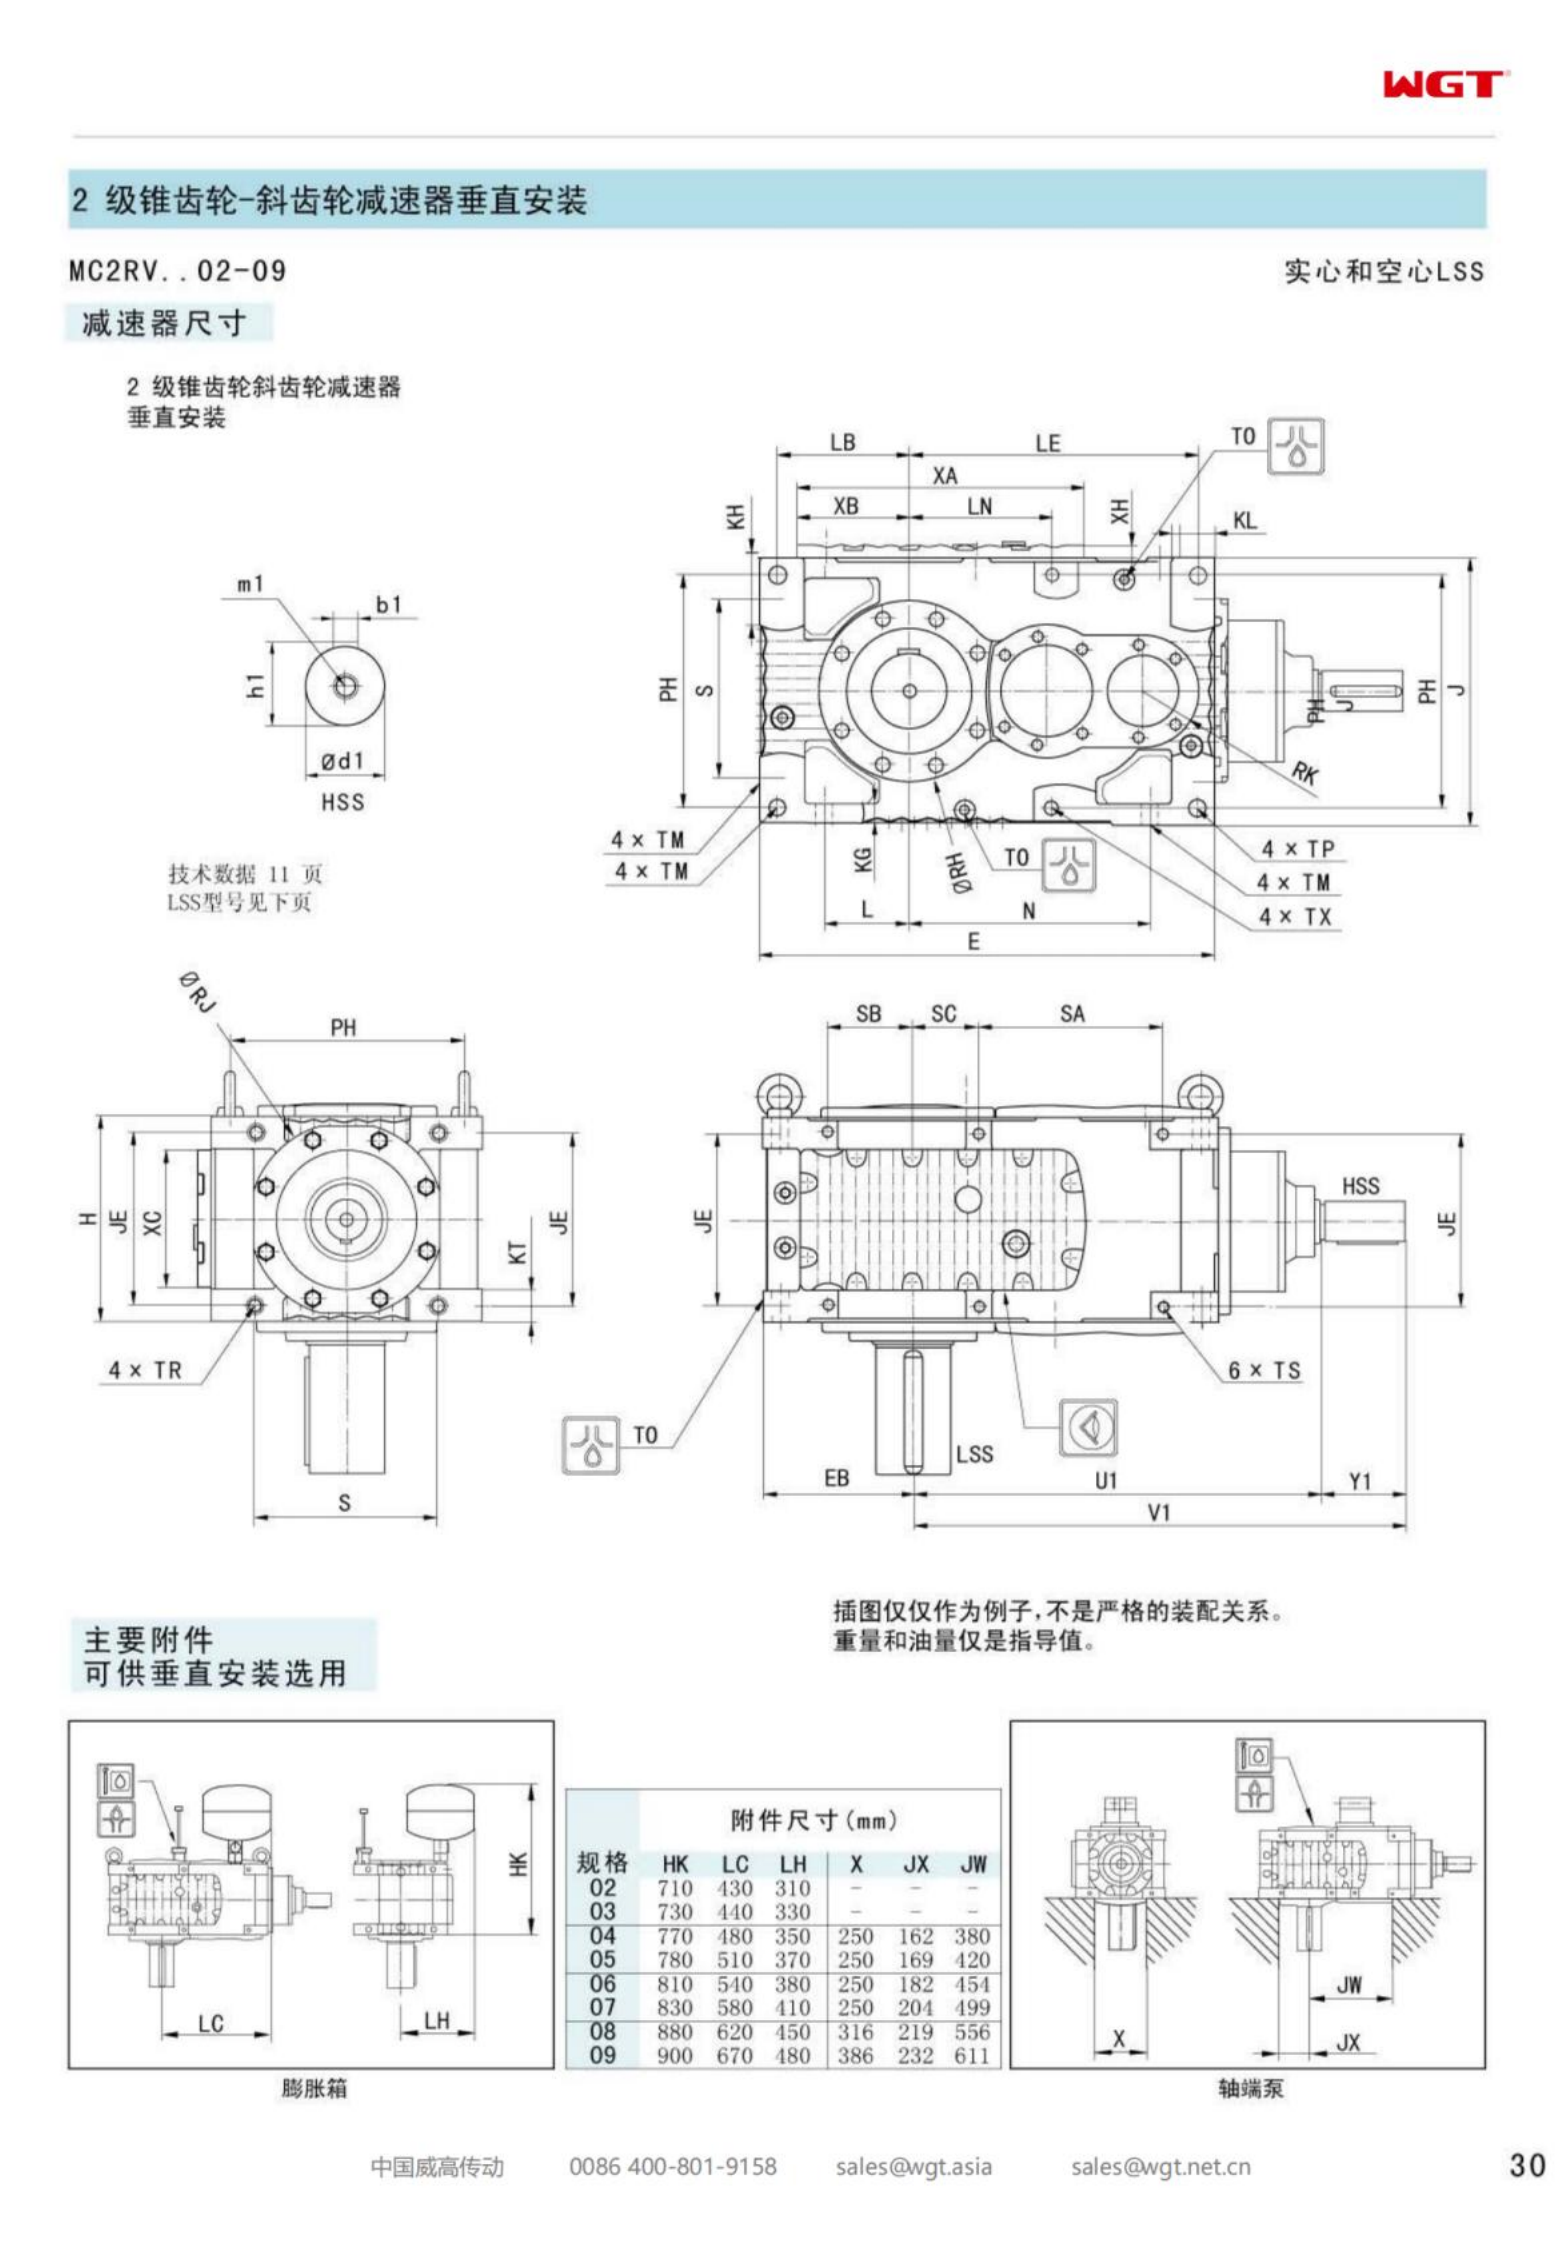 MC2RVHF03 replaces _SEW_MC_Series gearbox (patent)